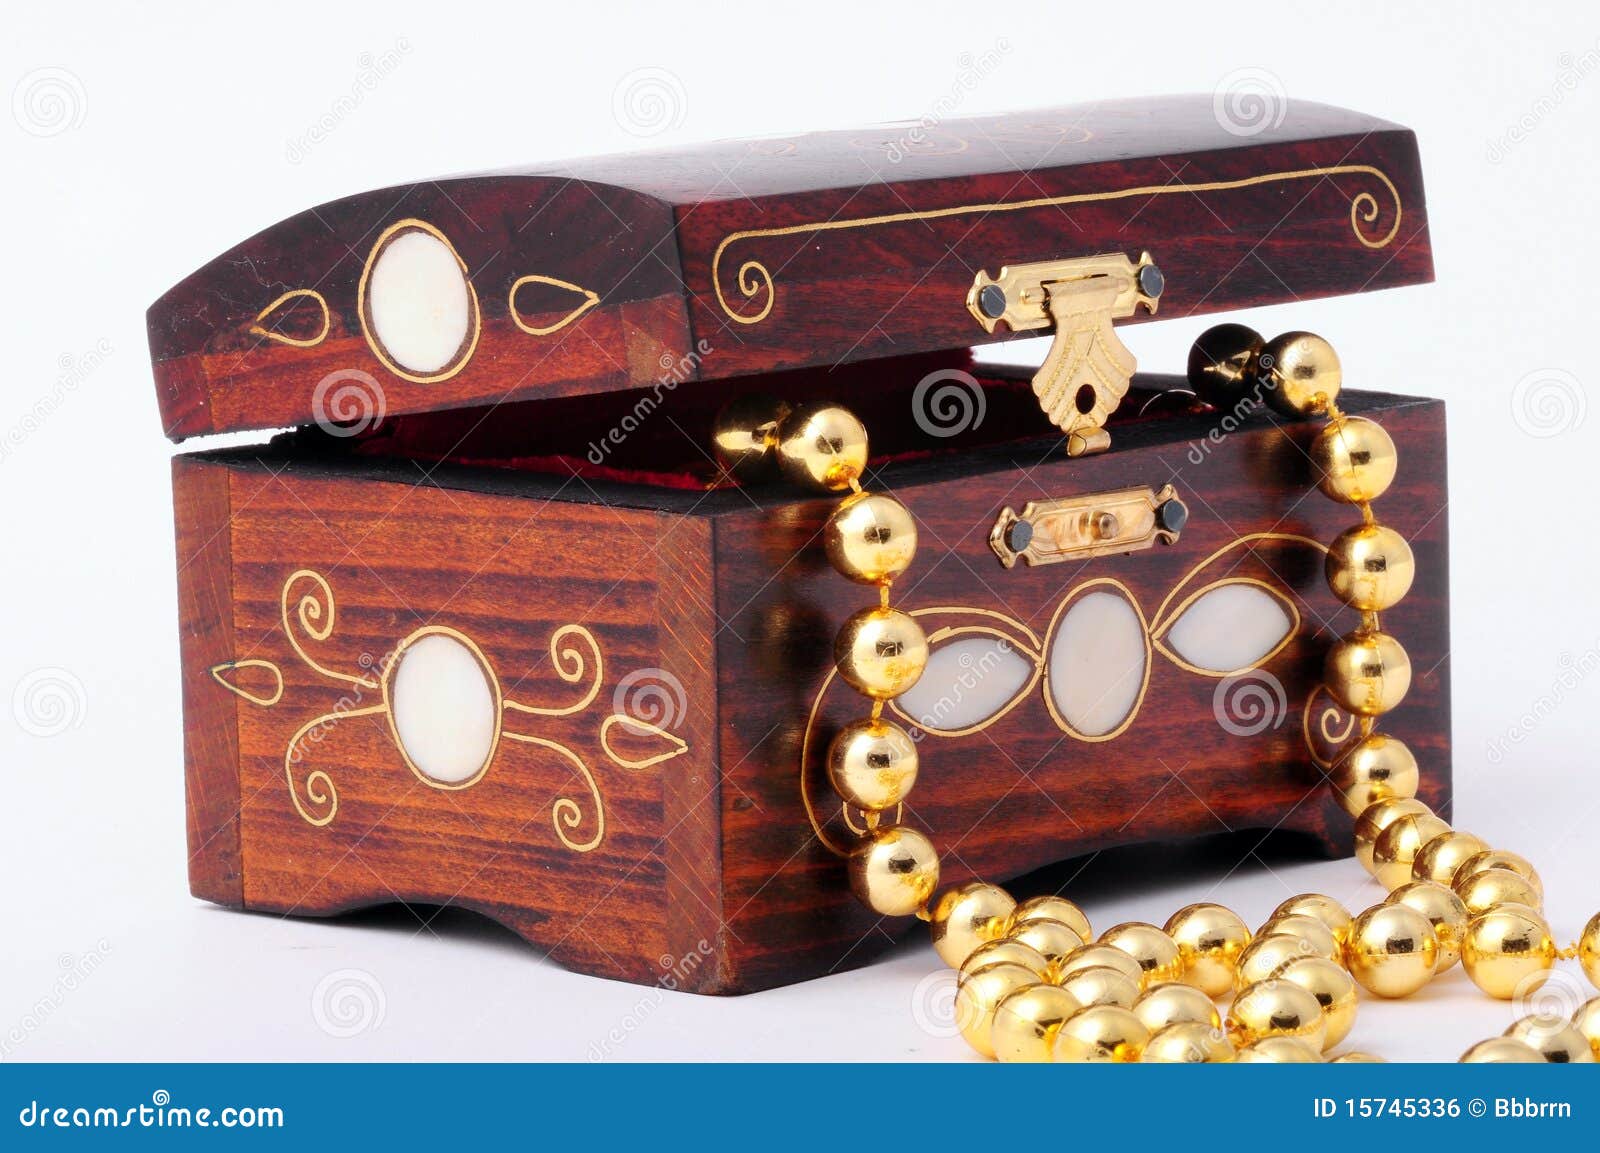 clipart jewelry box - photo #34